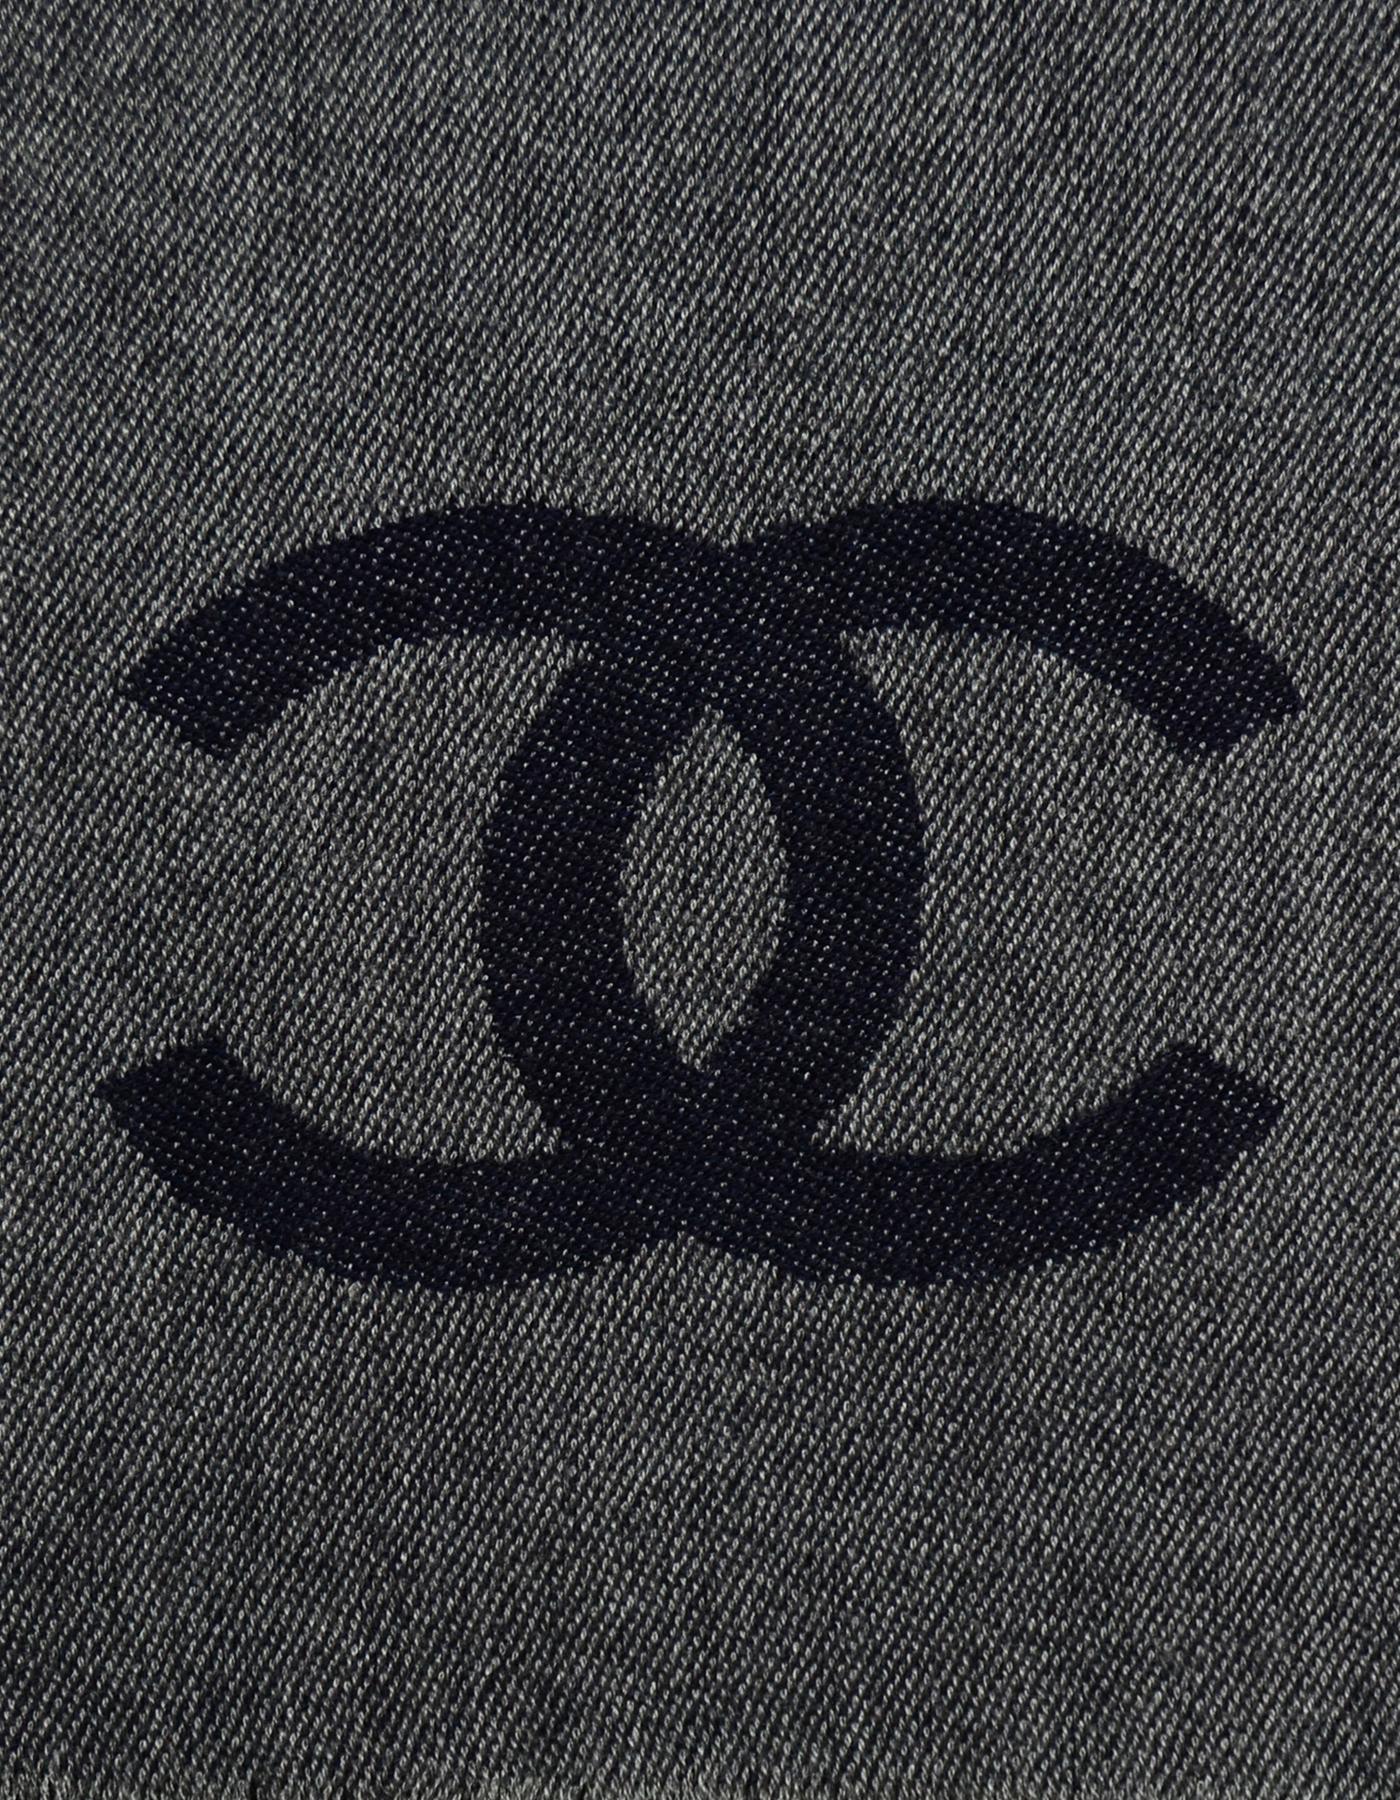 Chanel CC Grey/Blue Silk/Cashmere Blanket Scarf/Stole 30